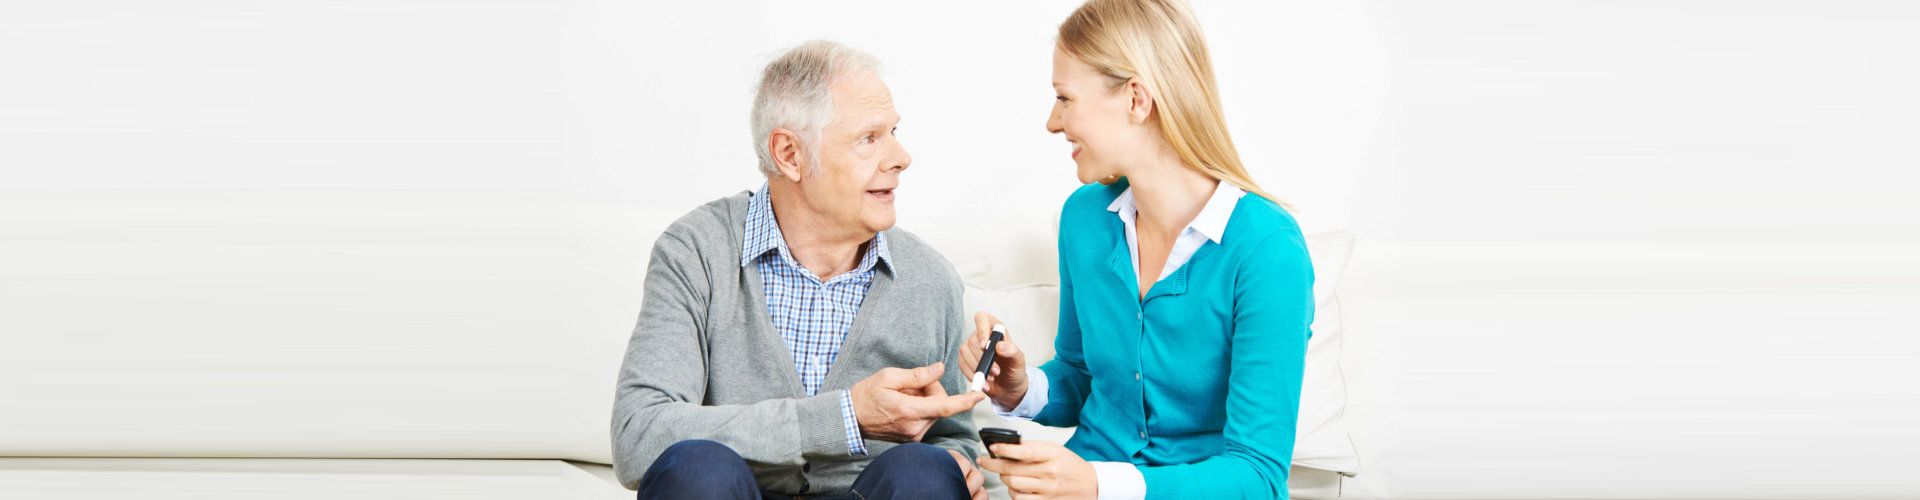 caregiver talking to the elderly man